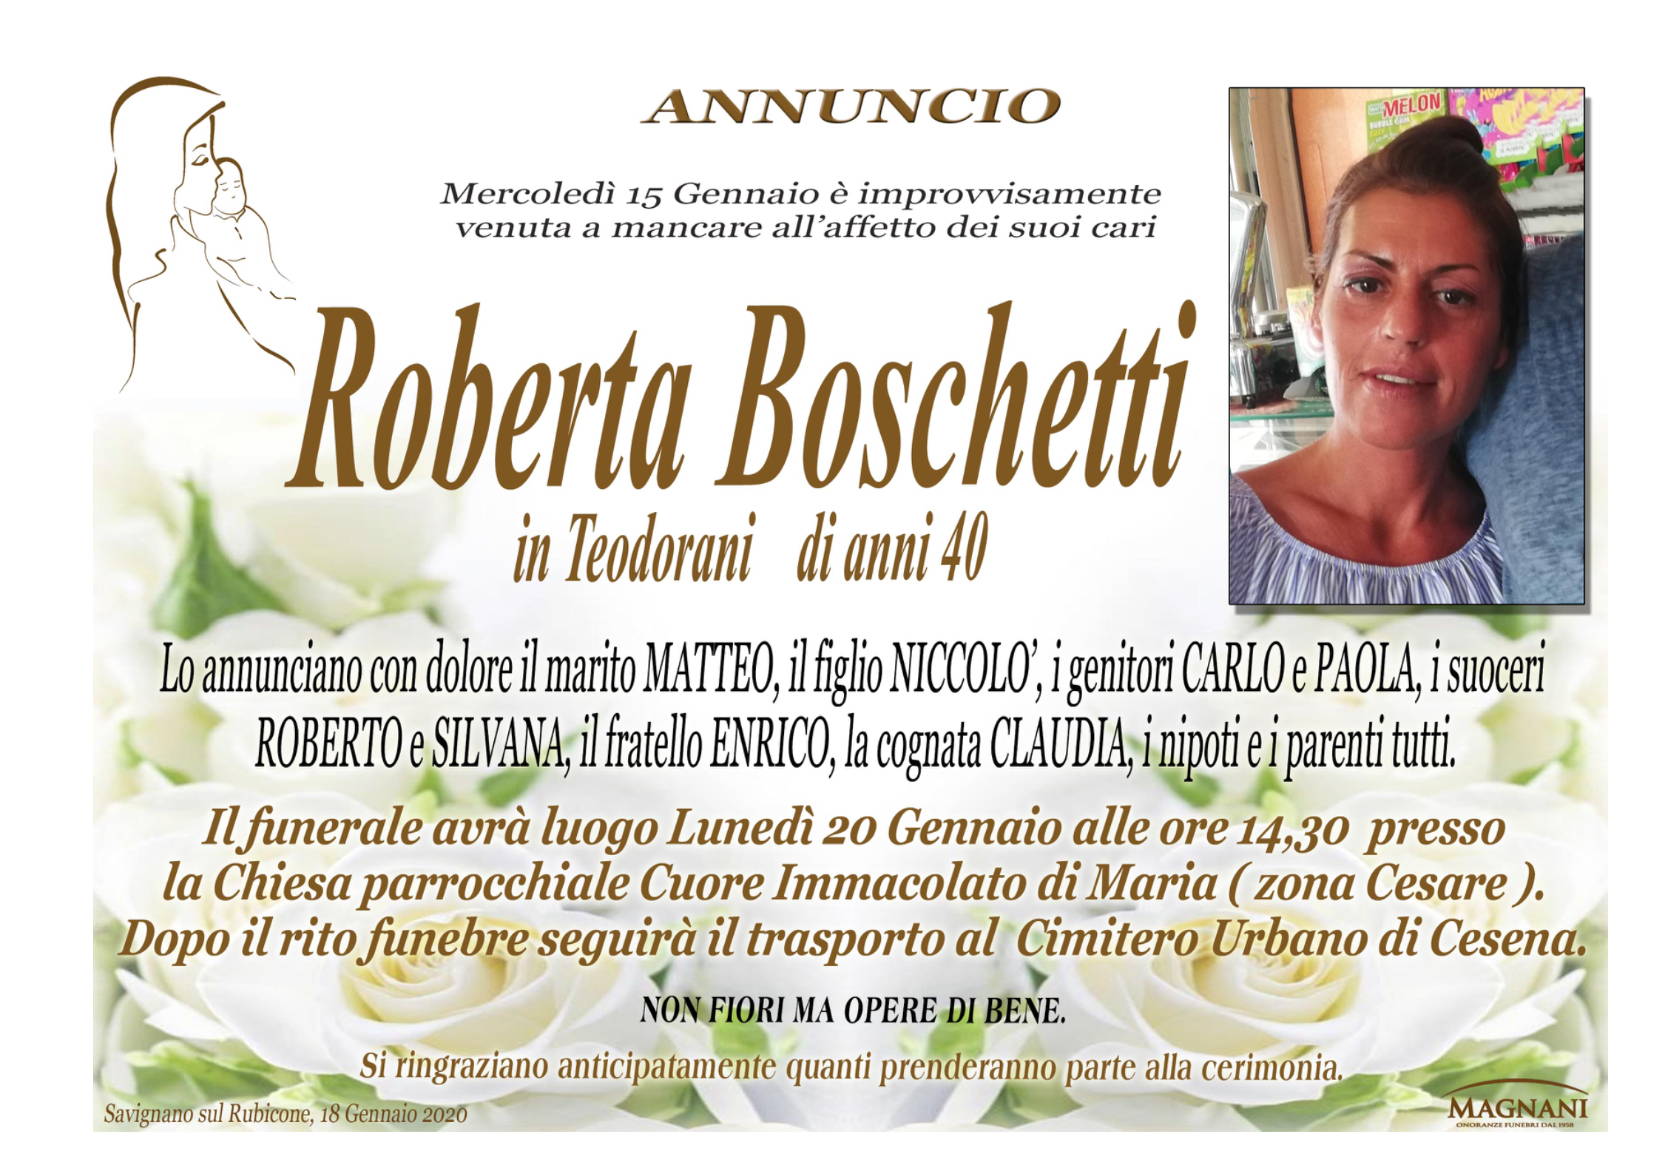 Roberta Boschetti